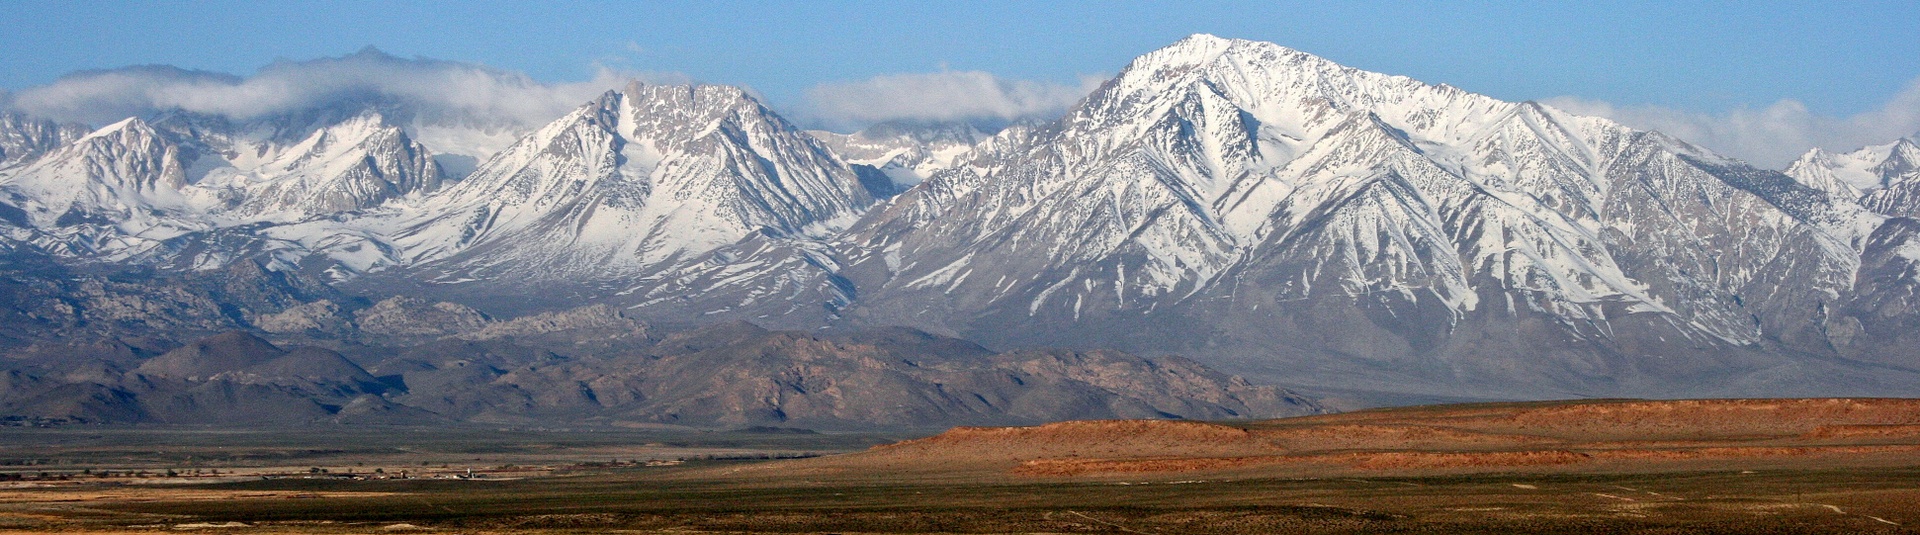 Mount Tom and Basin Mountain, near Bishop, CA